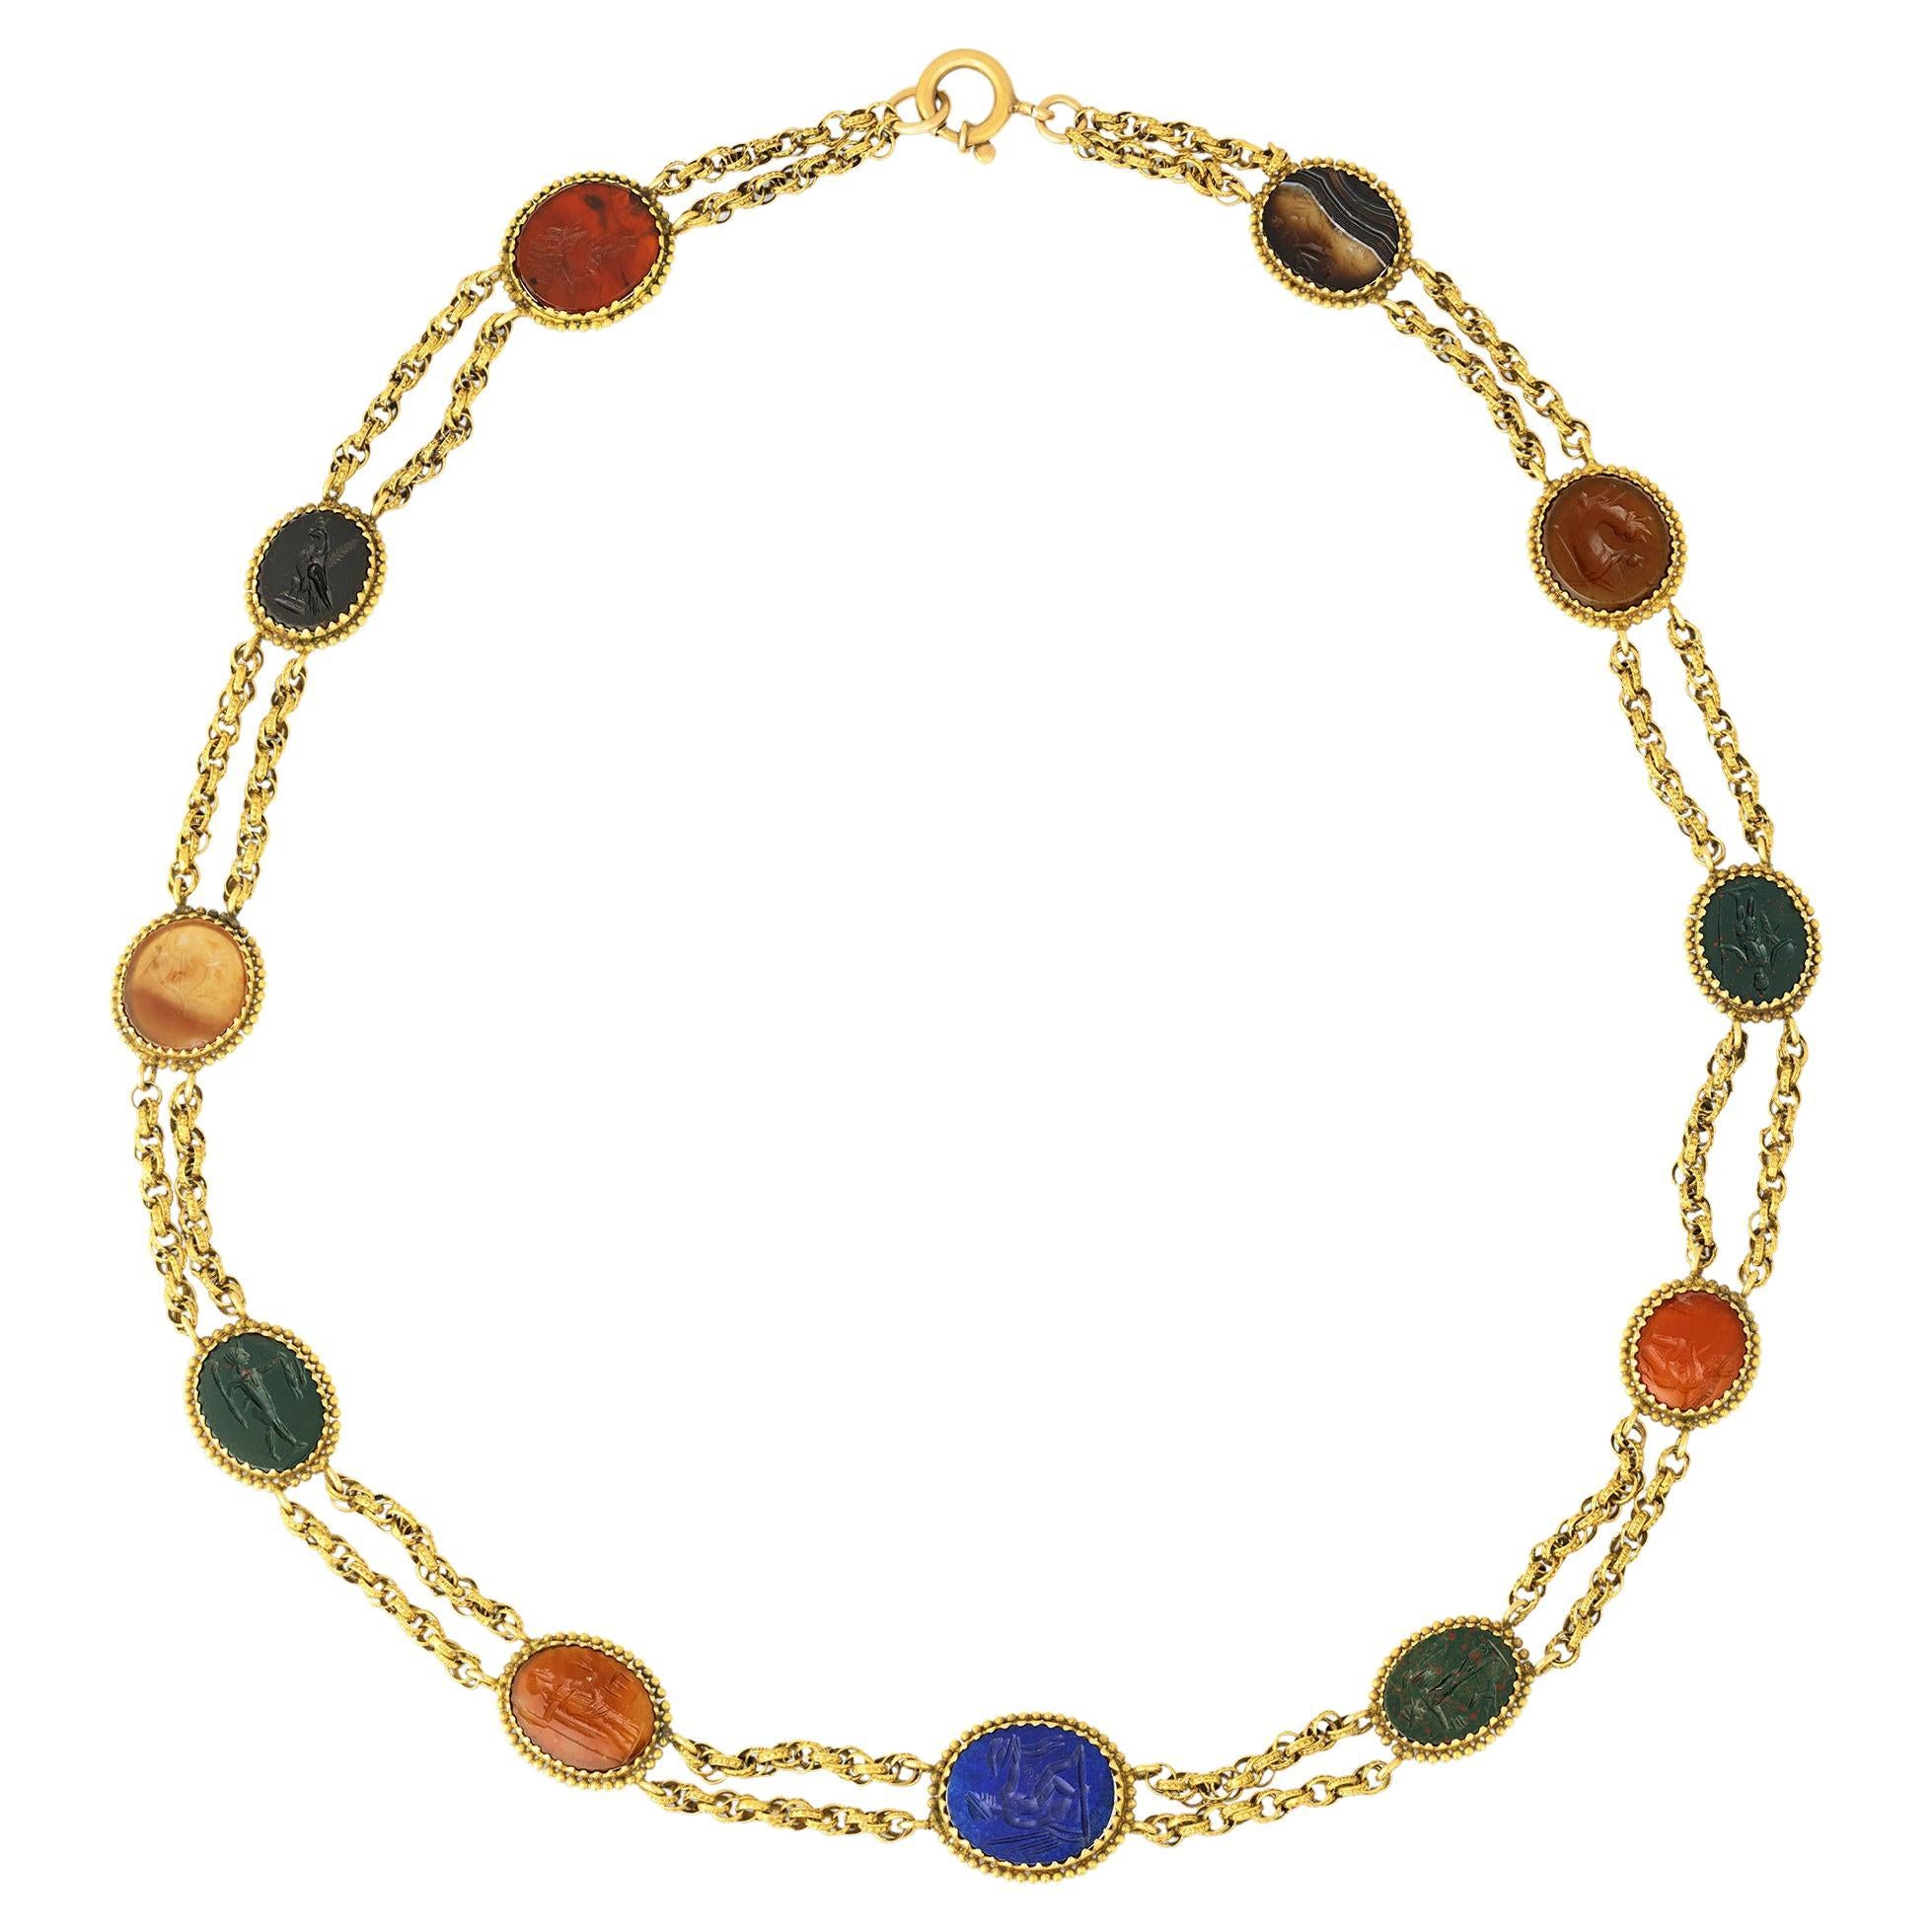 Roman Intaglio Gemstone Necklace